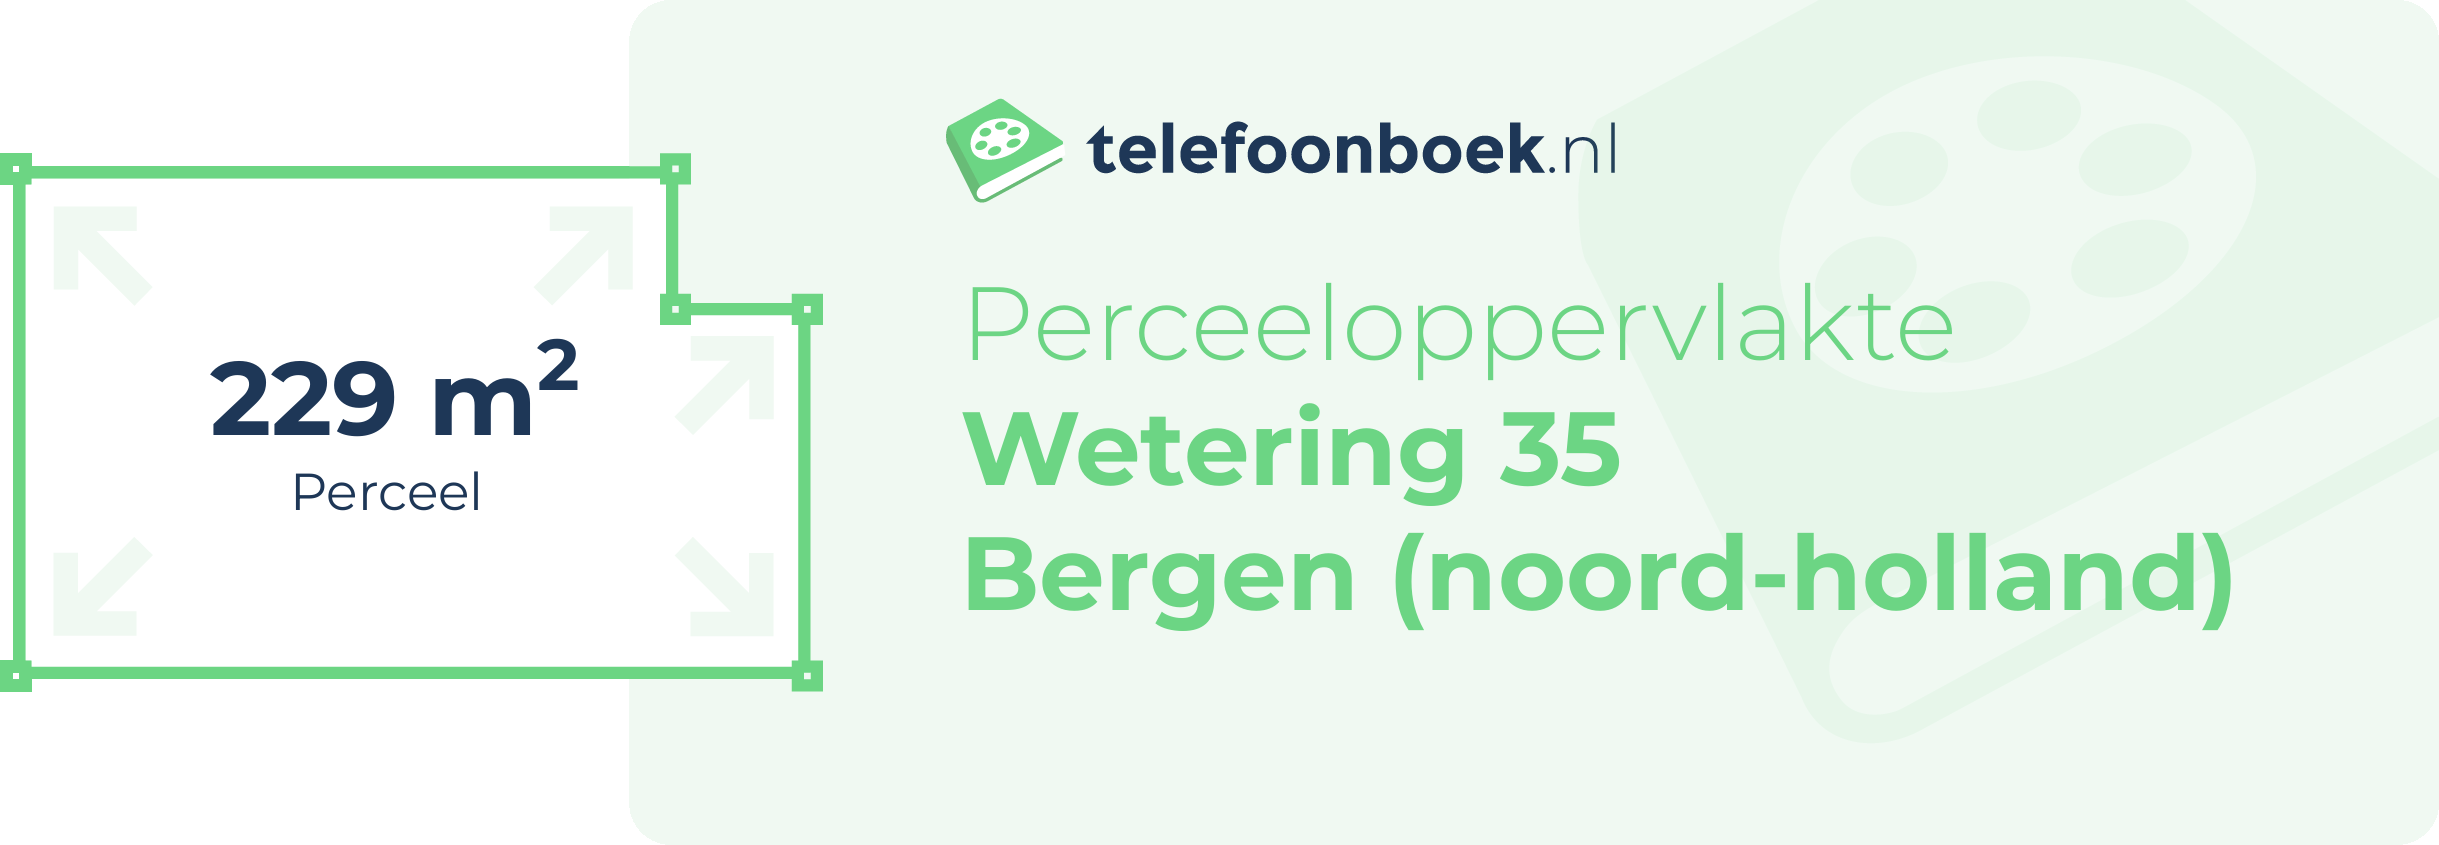 Perceeloppervlakte Wetering 35 Bergen (Noord-Holland)